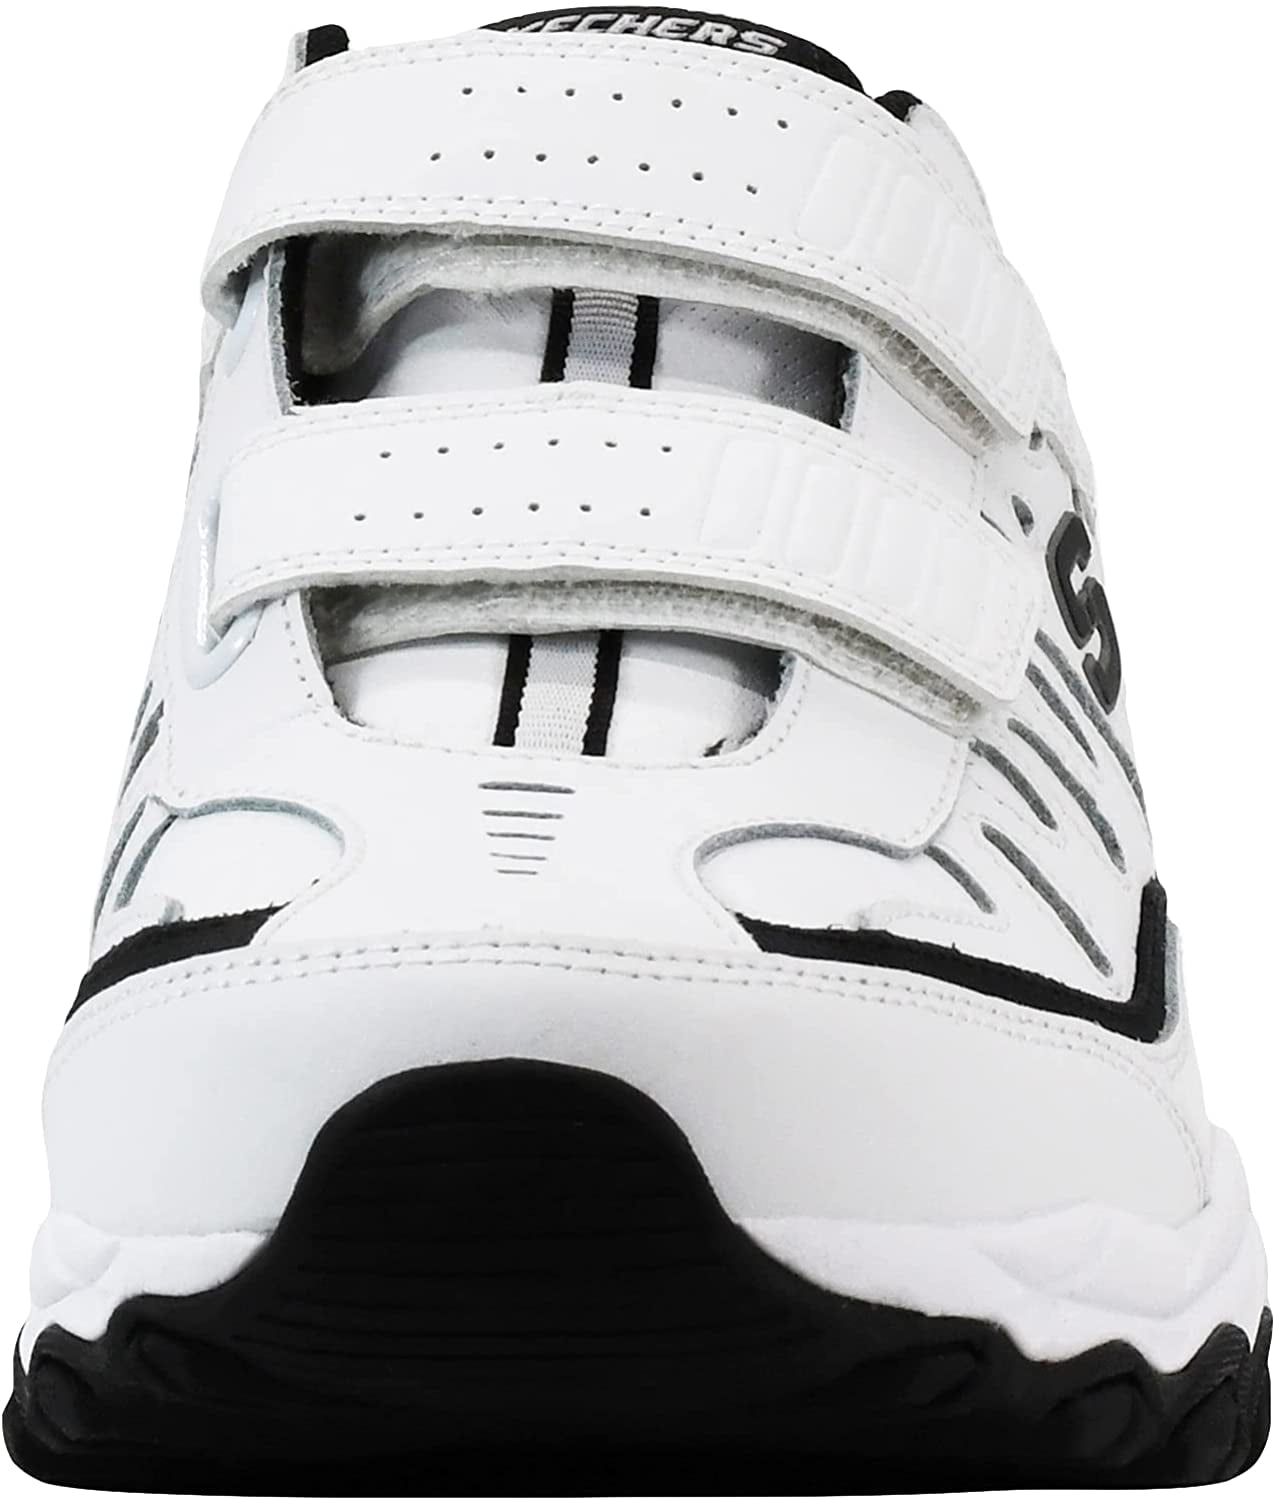 Skechers Men's Afterburn Strike Memory Foam Sneaker White/Black 14 M US - Walmart.com